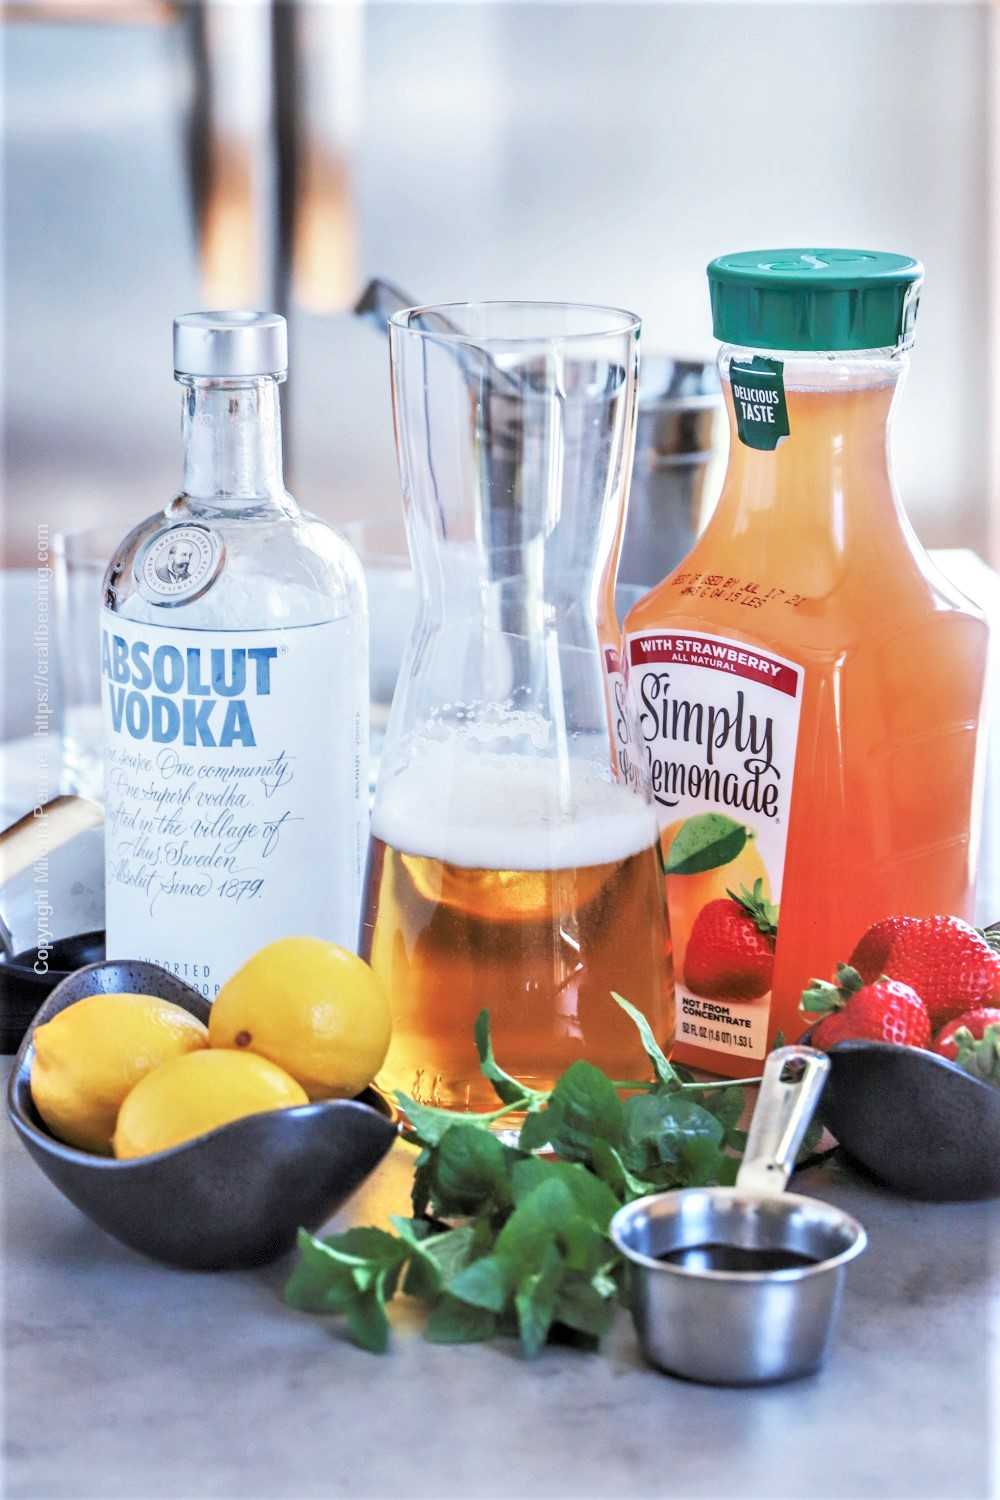 Ingredients for Beer lemonade with vodka and strawberries